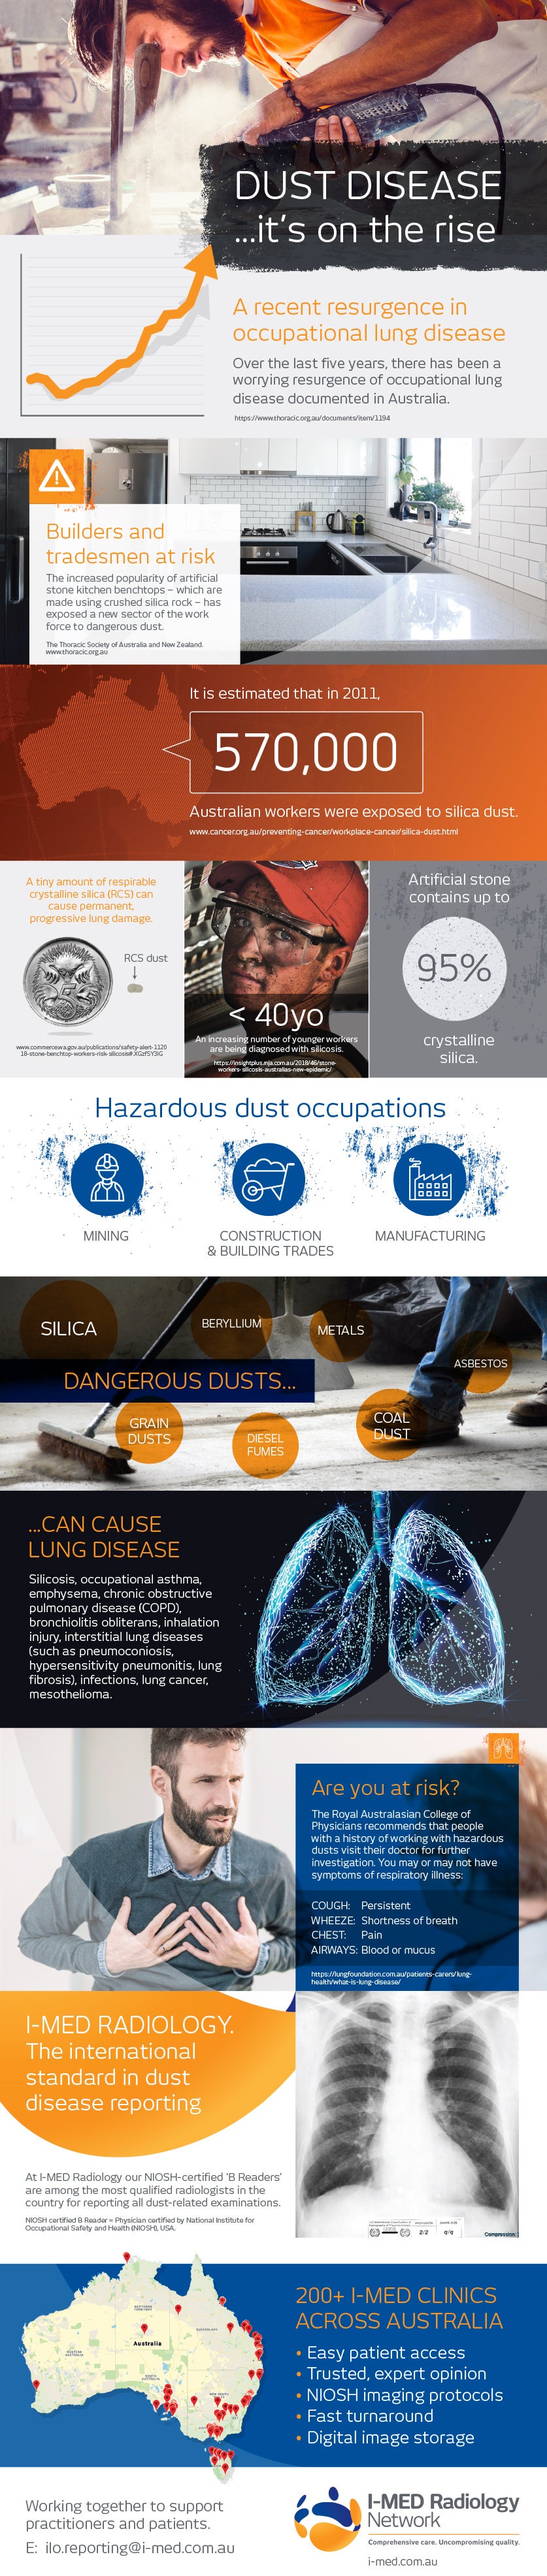 Dust disease infographic